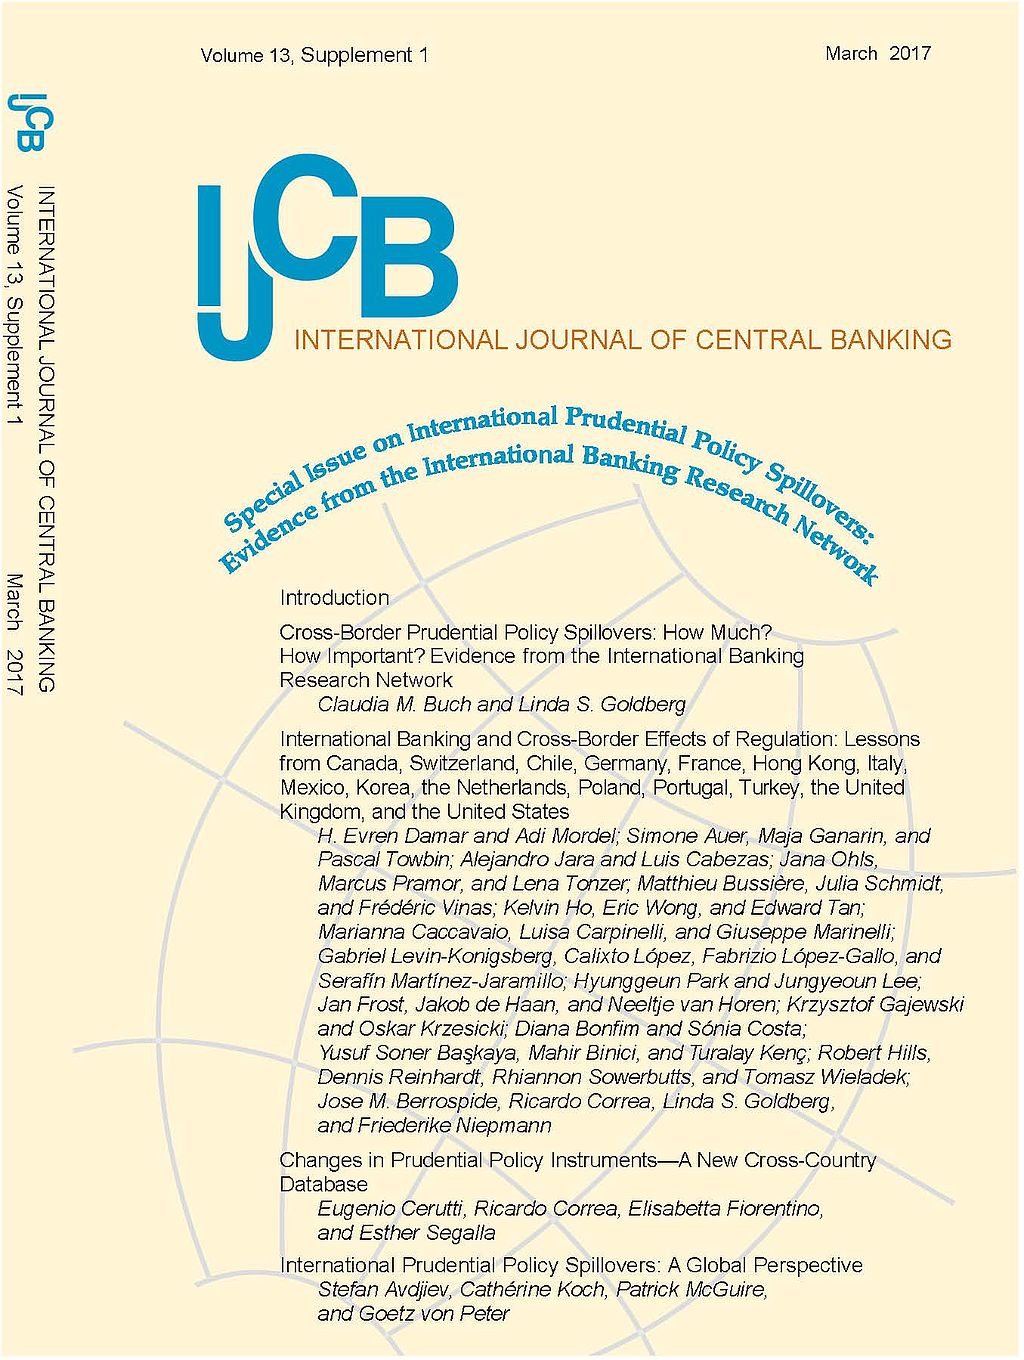 cover_international-journal-of-central-banking.jpg